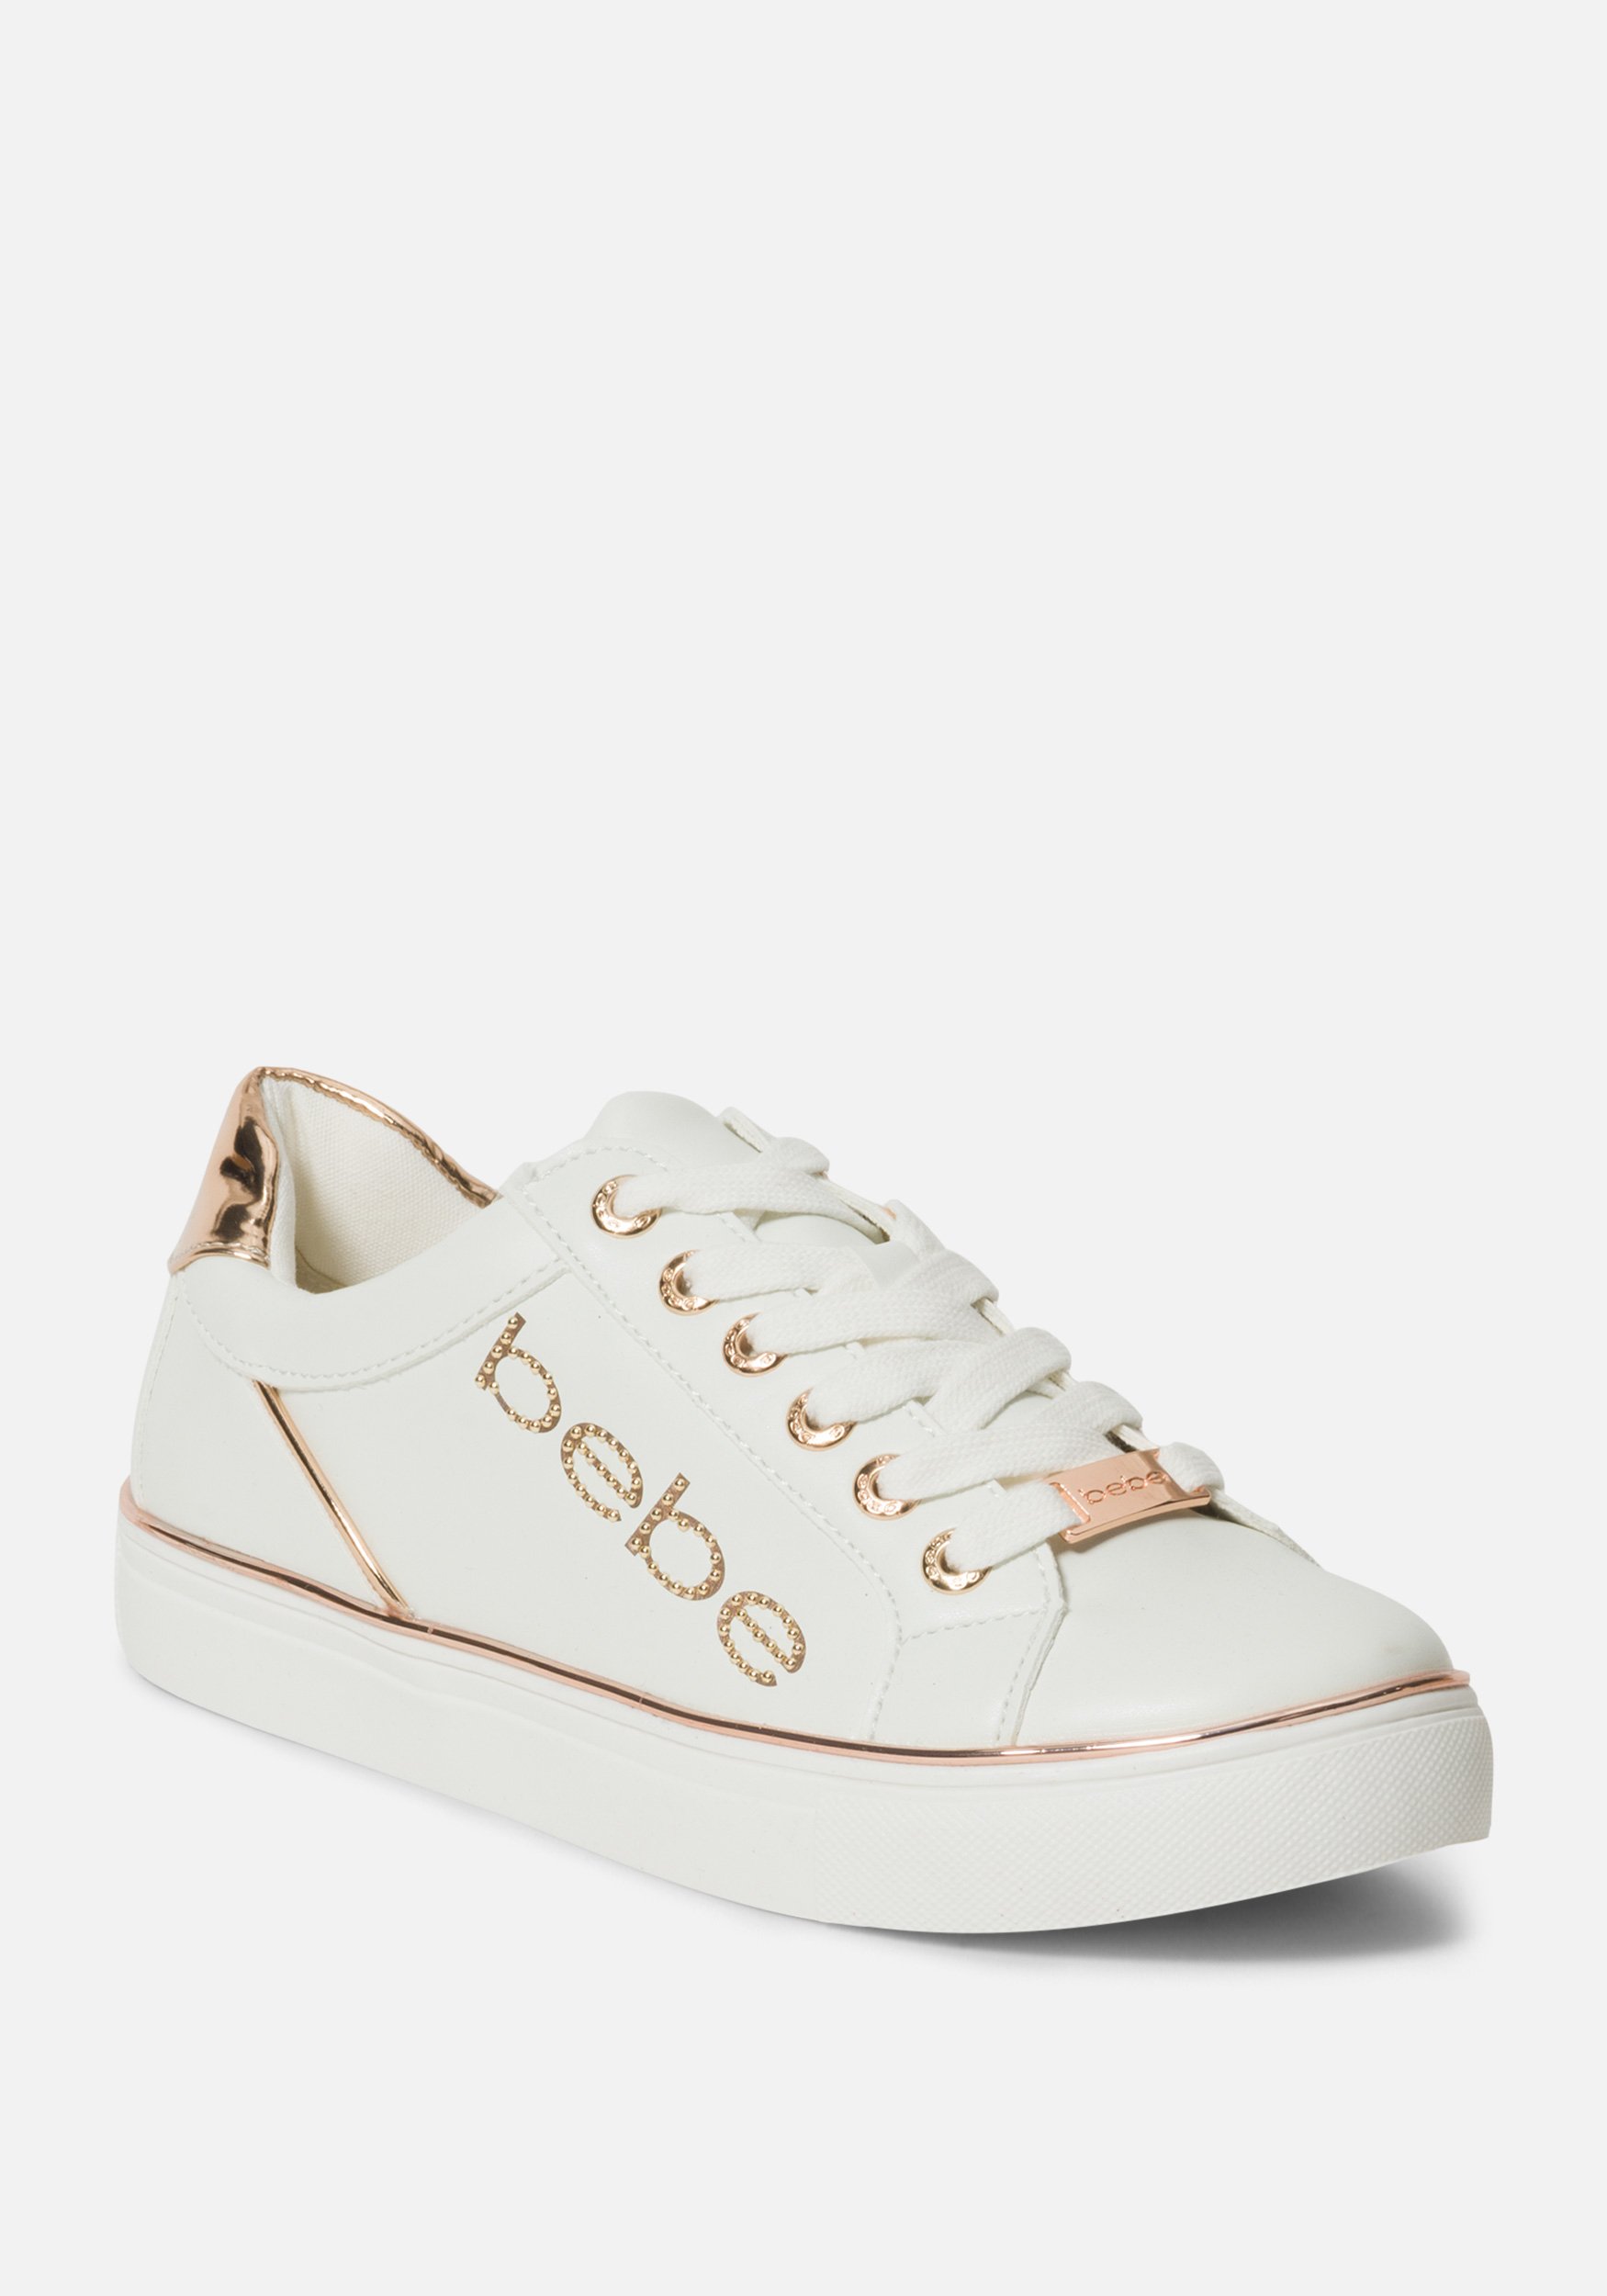 Women's Celise Bebe Logo Sneakers, Size 7 in White/Rose Gold Synthetic